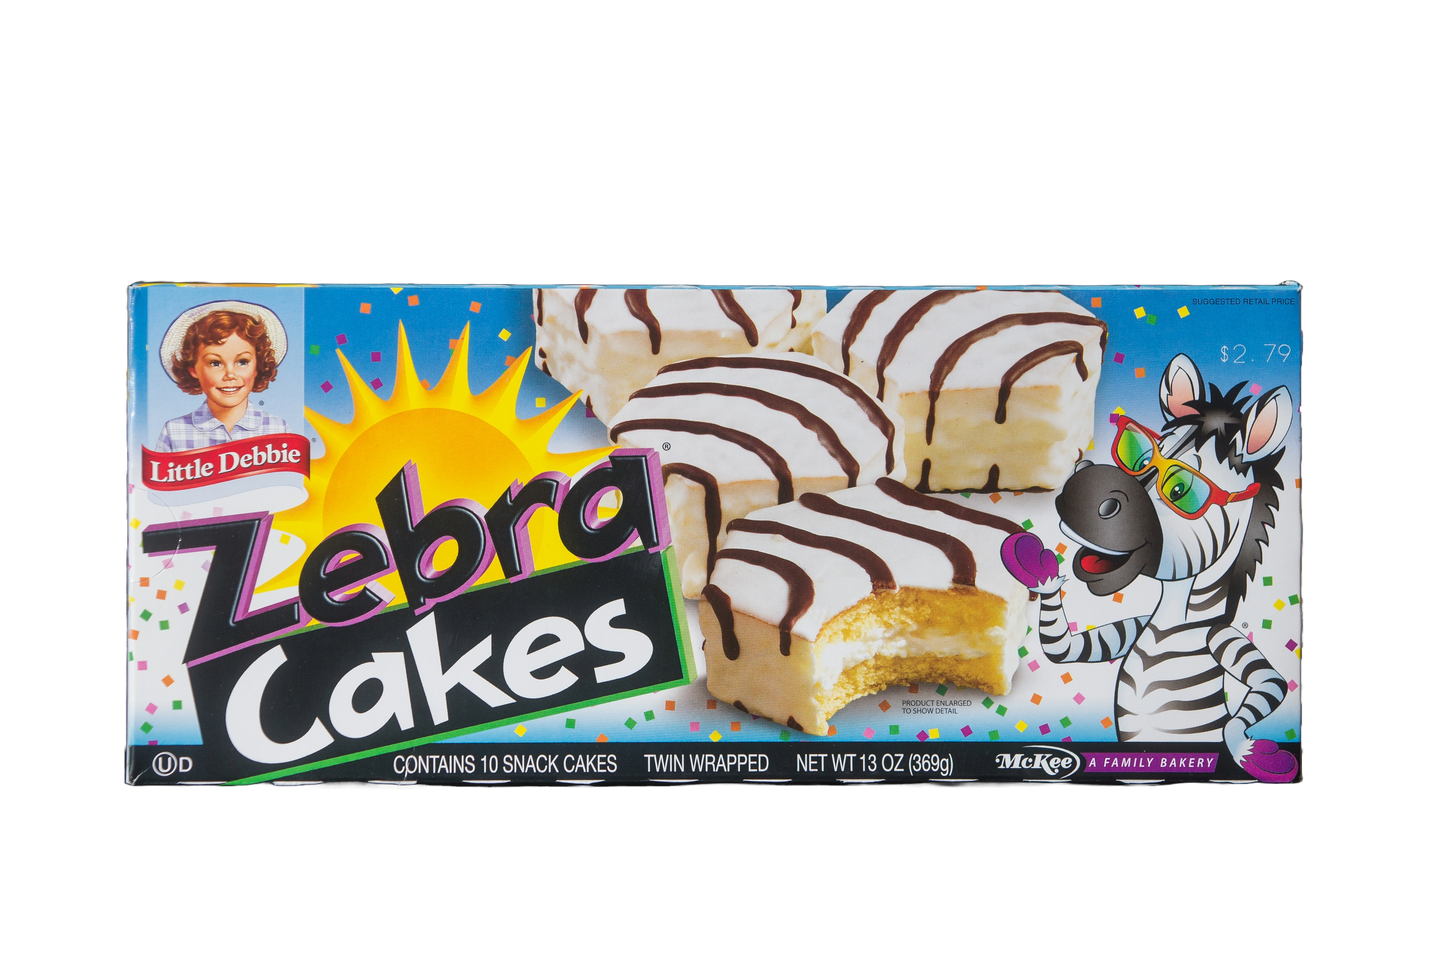 Little Debbie Zebra Cakes, 10 count